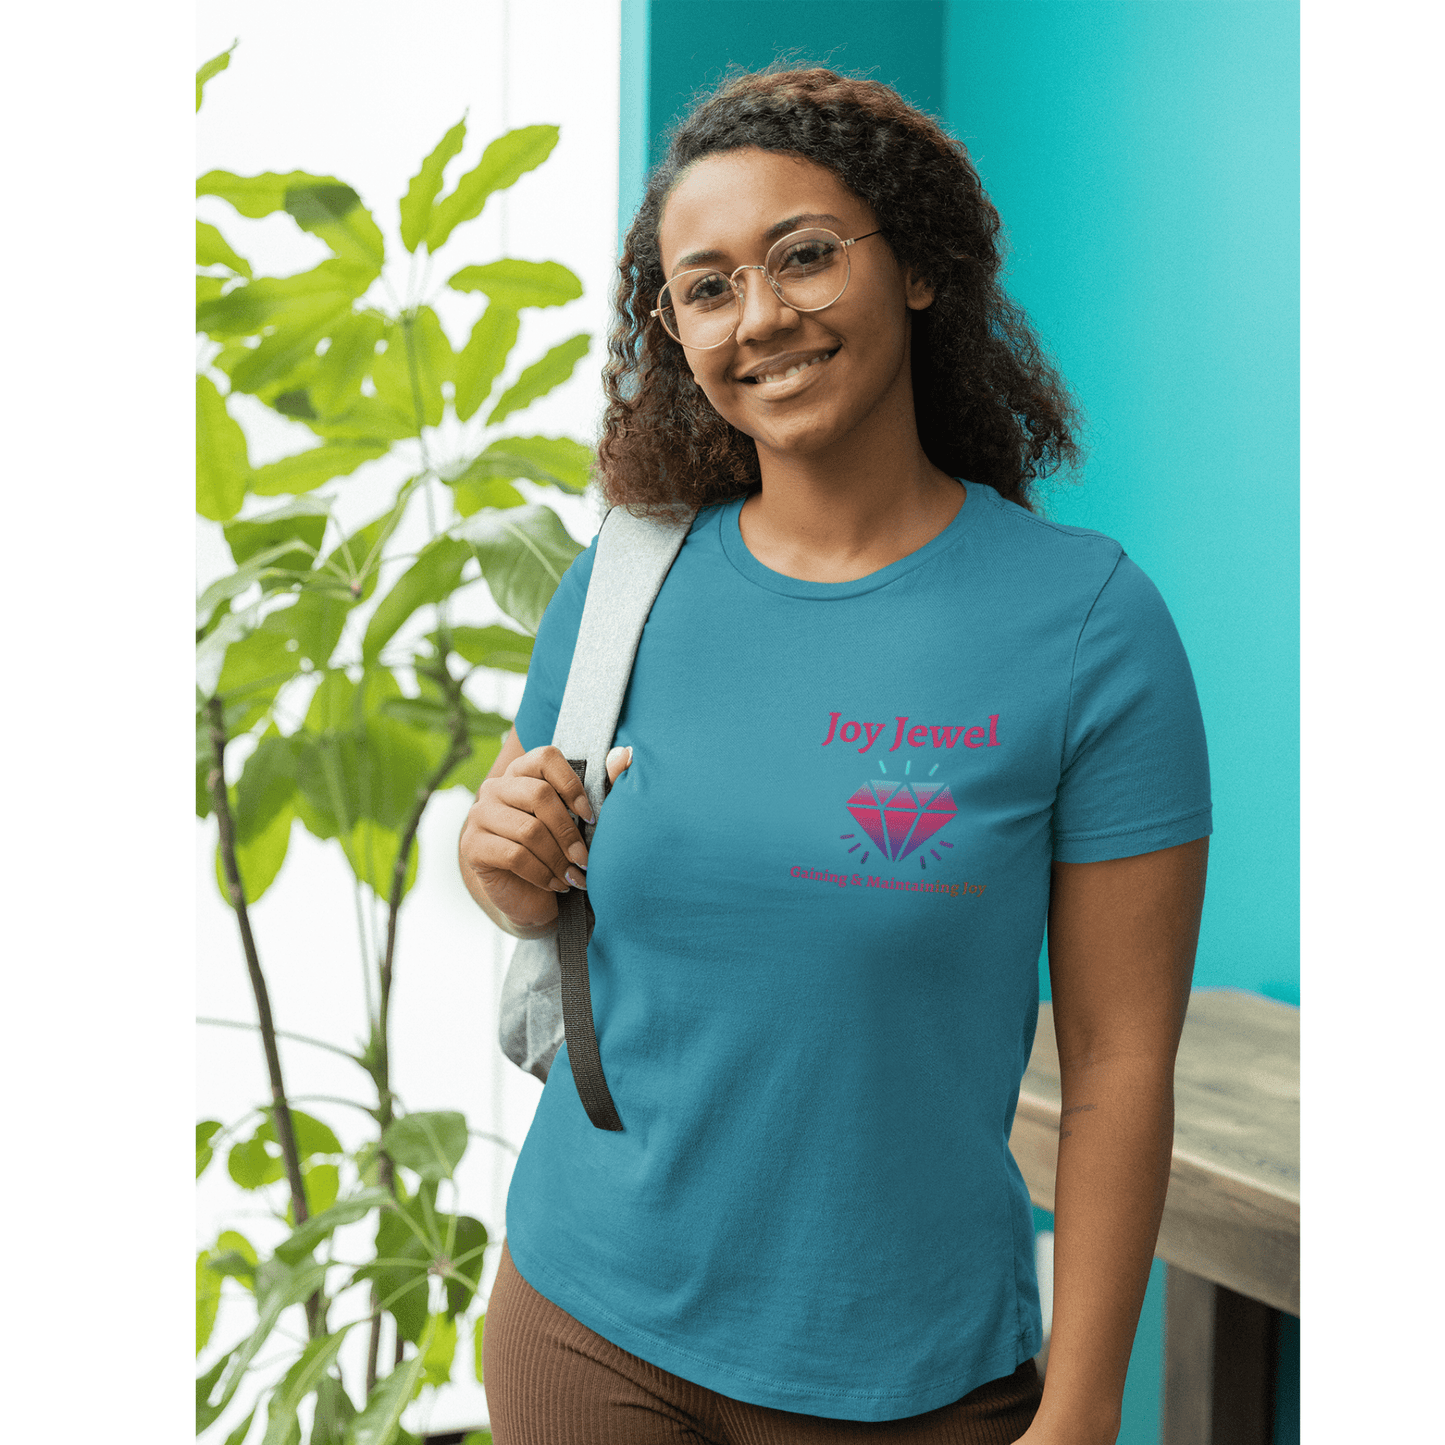 Joy Jewel: Gaining & Maintaining Joy (Small Graphic Fuchsia Text with Left Chest Colorful Diamond) Unisex Jersey Short Sleeve Tee - Style: Bella+Canvas 3001